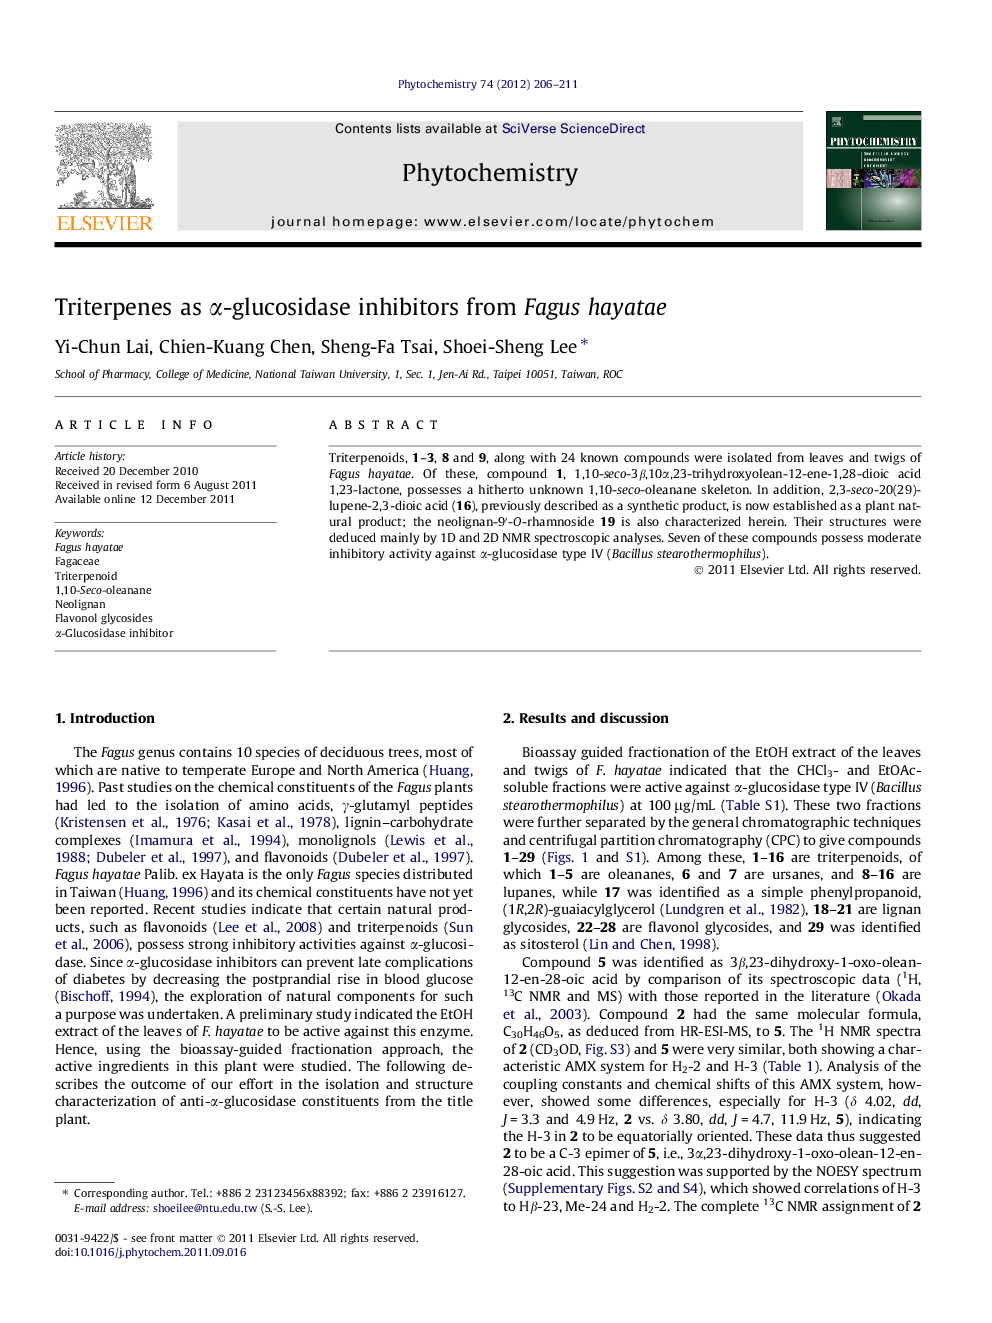 Triterpenes as Î±-glucosidase inhibitors from Fagus hayatae